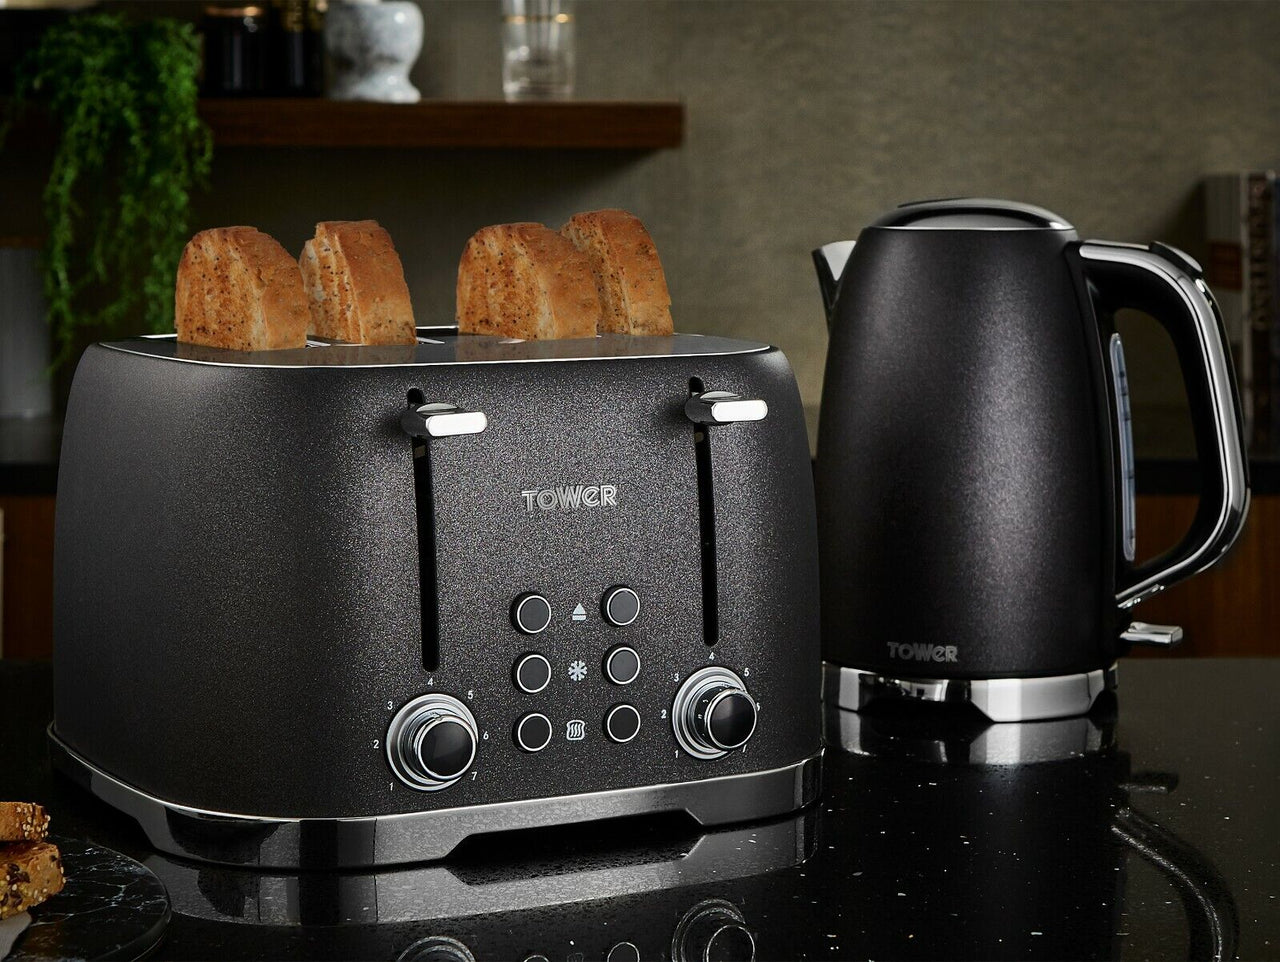 Tower Glitz Kettle Toaster Bread Bin & Canisters Set in Sparkling Black Noir